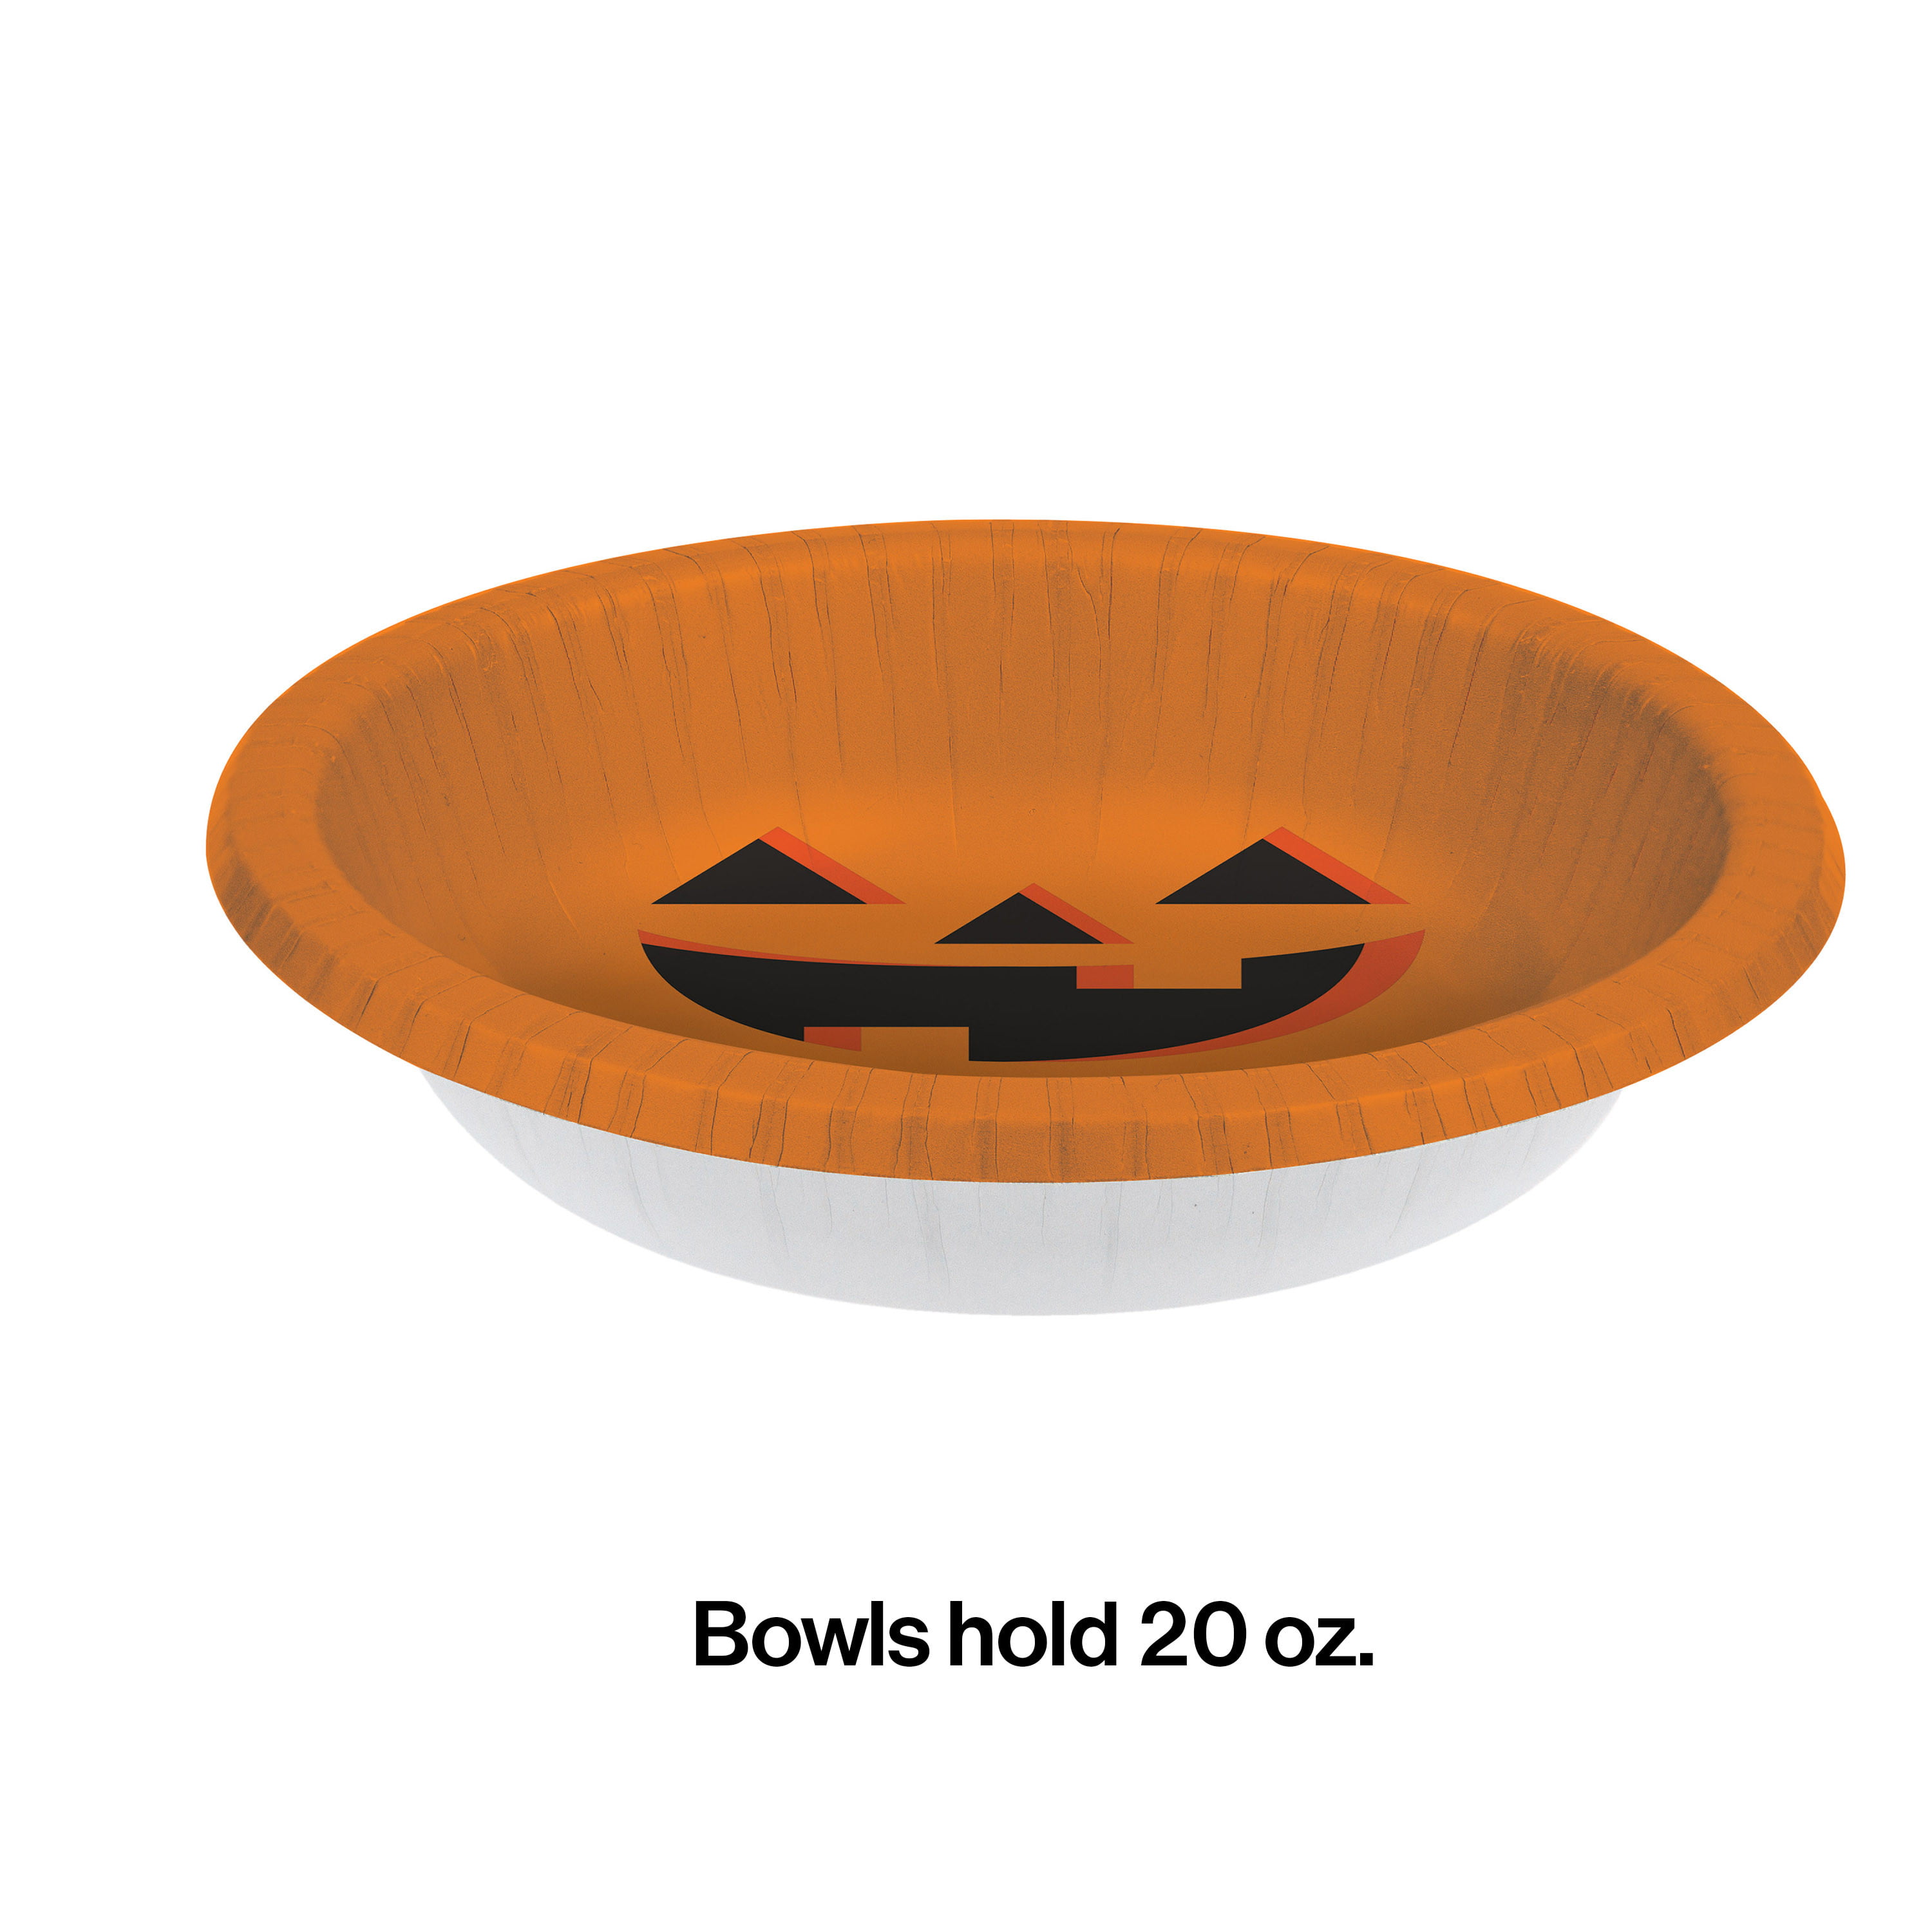 Shop the Viral Halloween Pumpkin Punch Bowl at Target